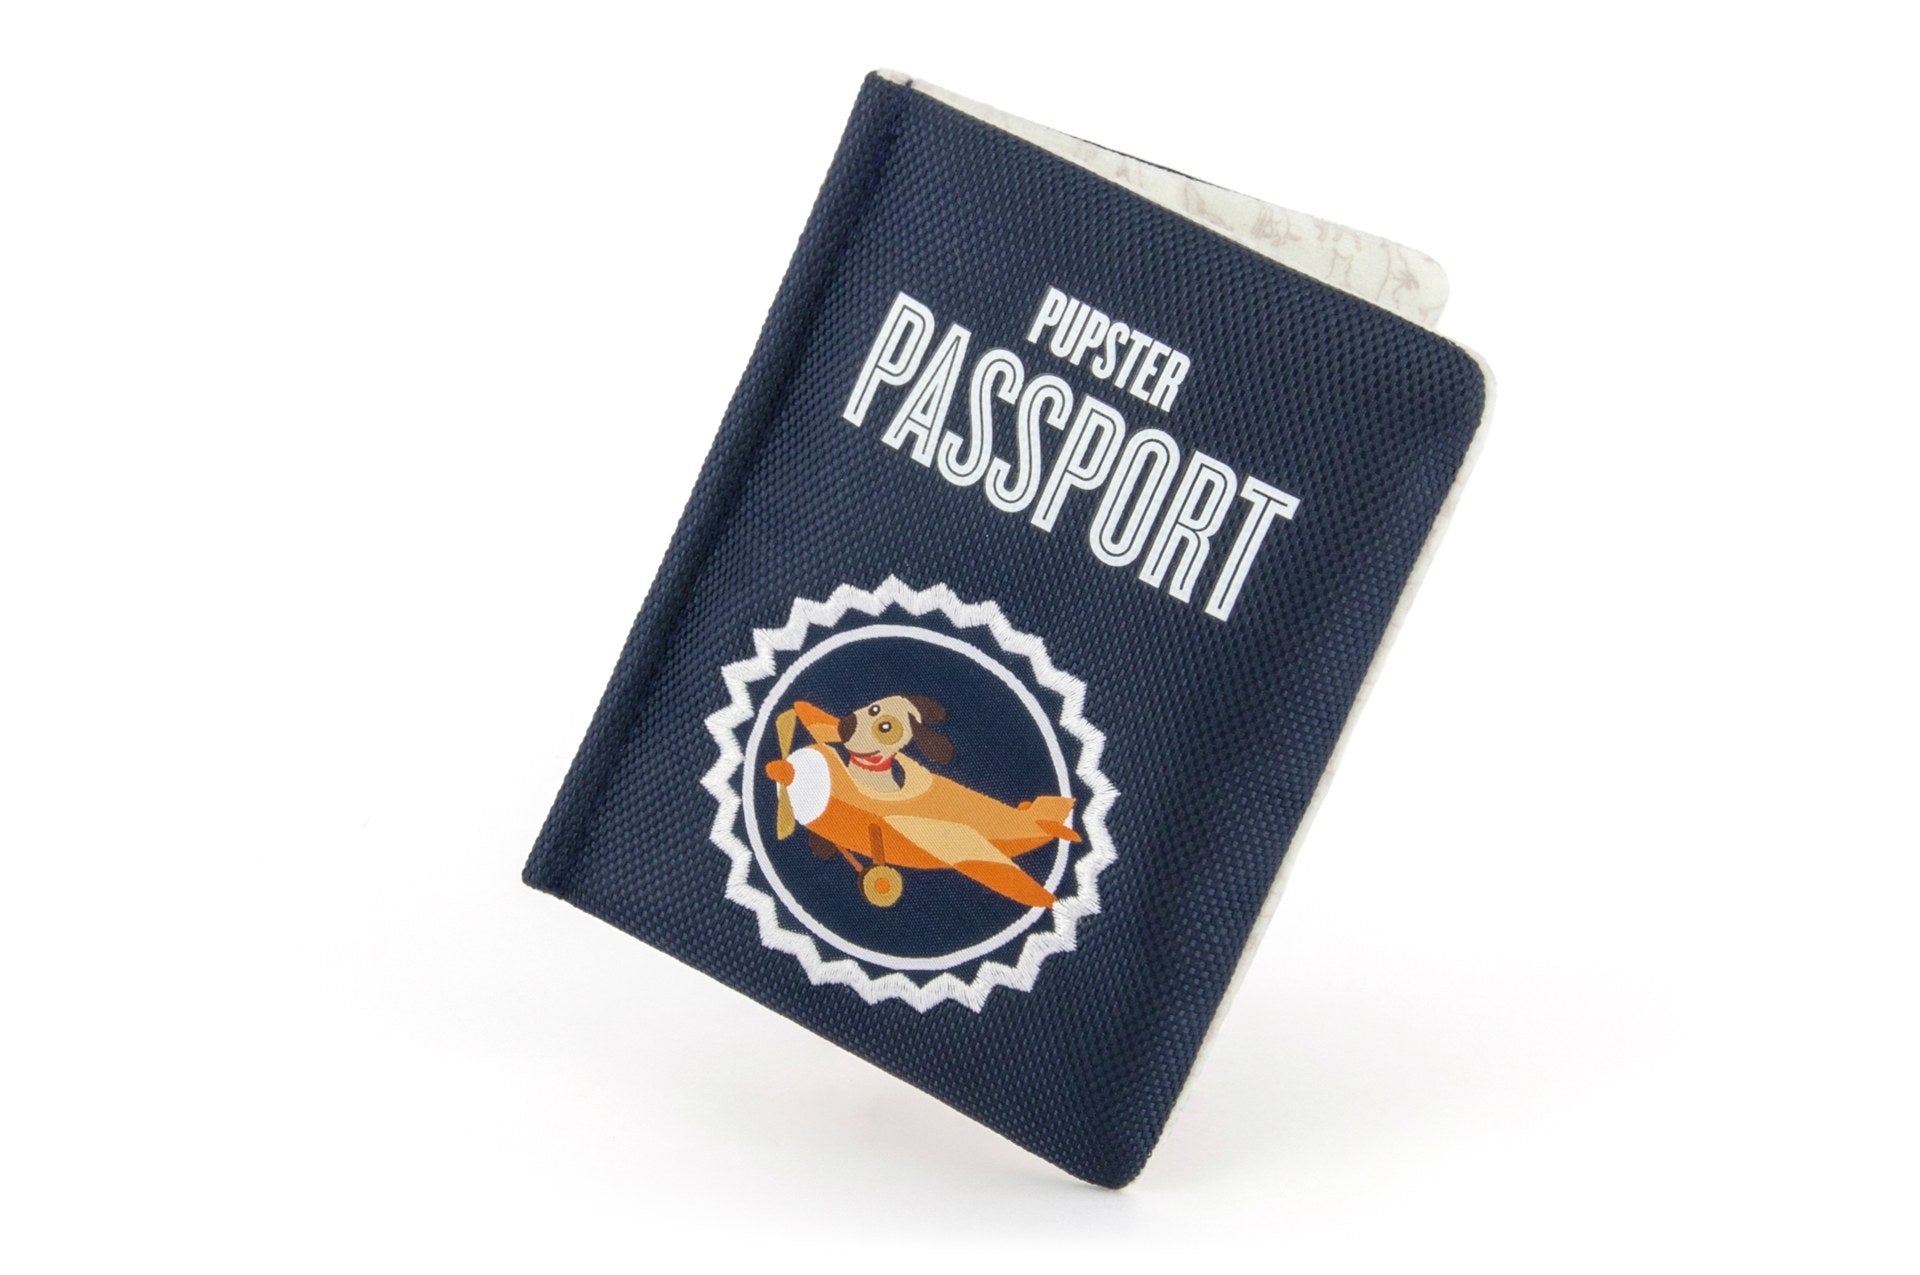 Globetrotter - Passport